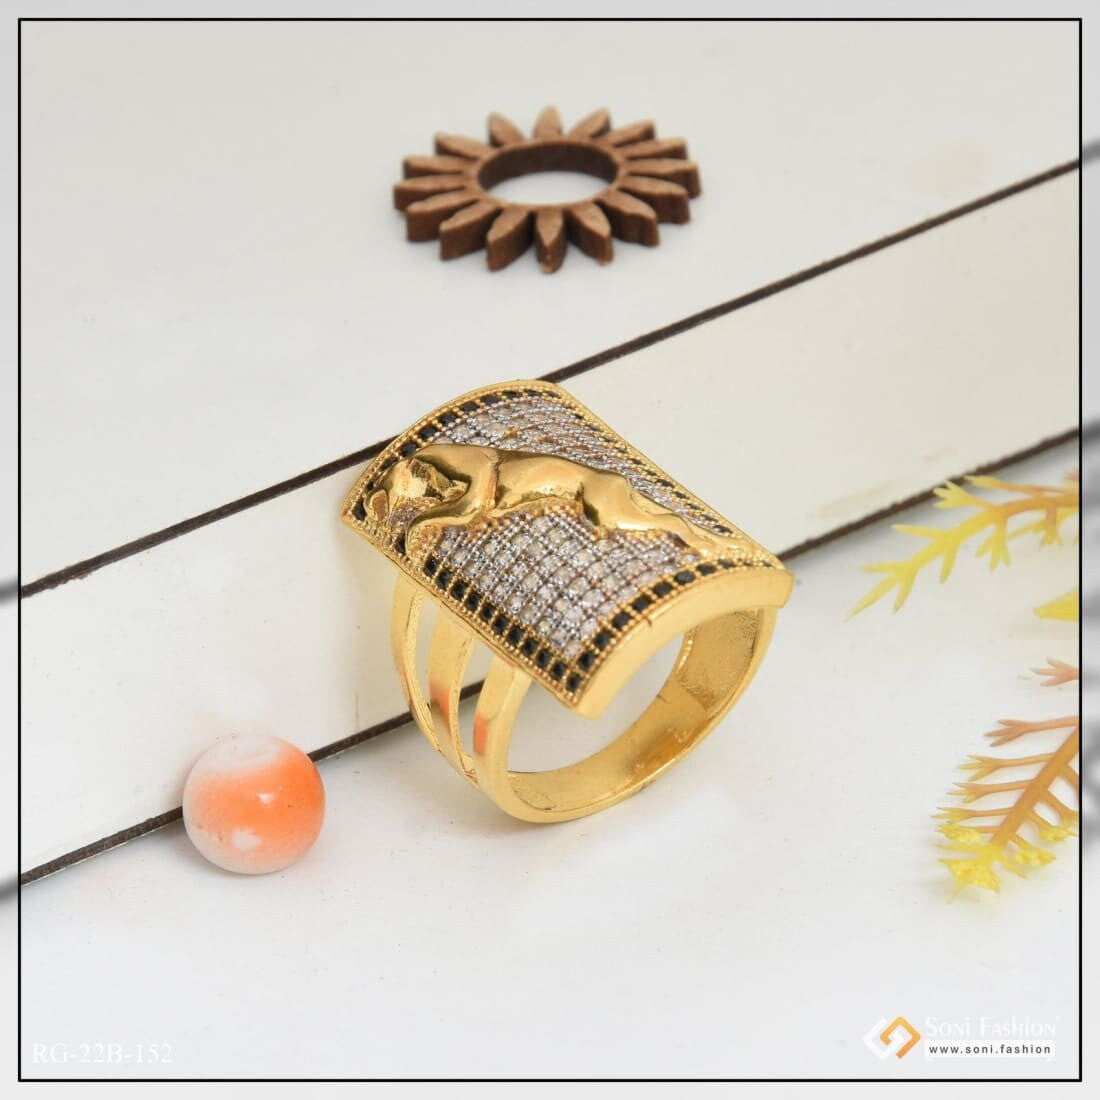 2 Carat Round Brilliant Cut Diamond Engagement Ring in Yellow Gold – Benz &  Co Diamonds